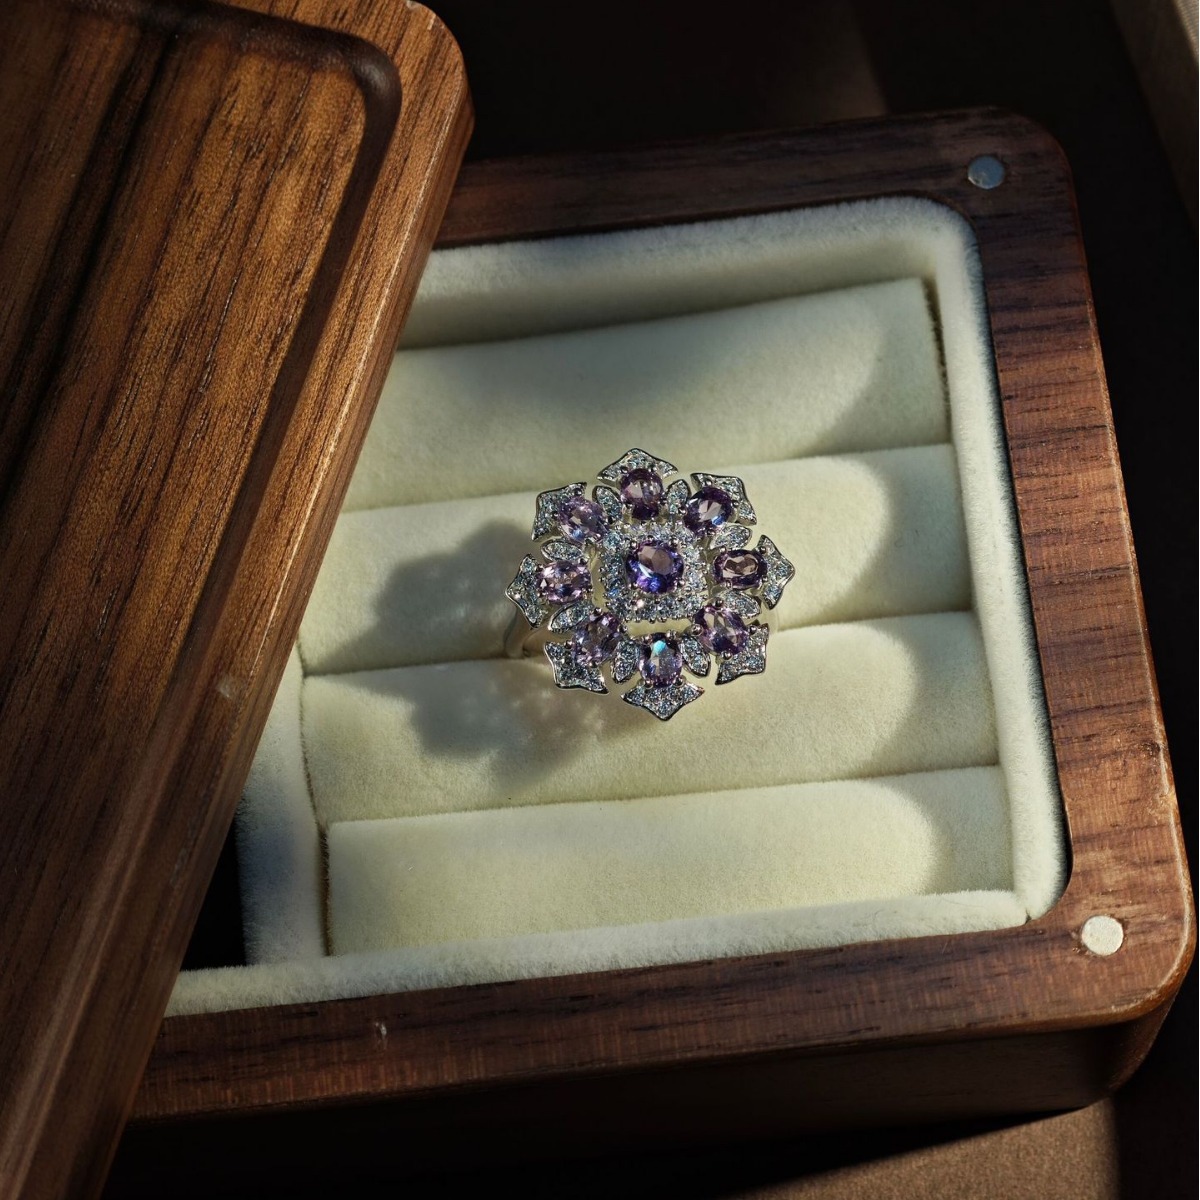 S925纯银镶天然紫水晶戒指活口戒指时尚爆款外贸直播批发